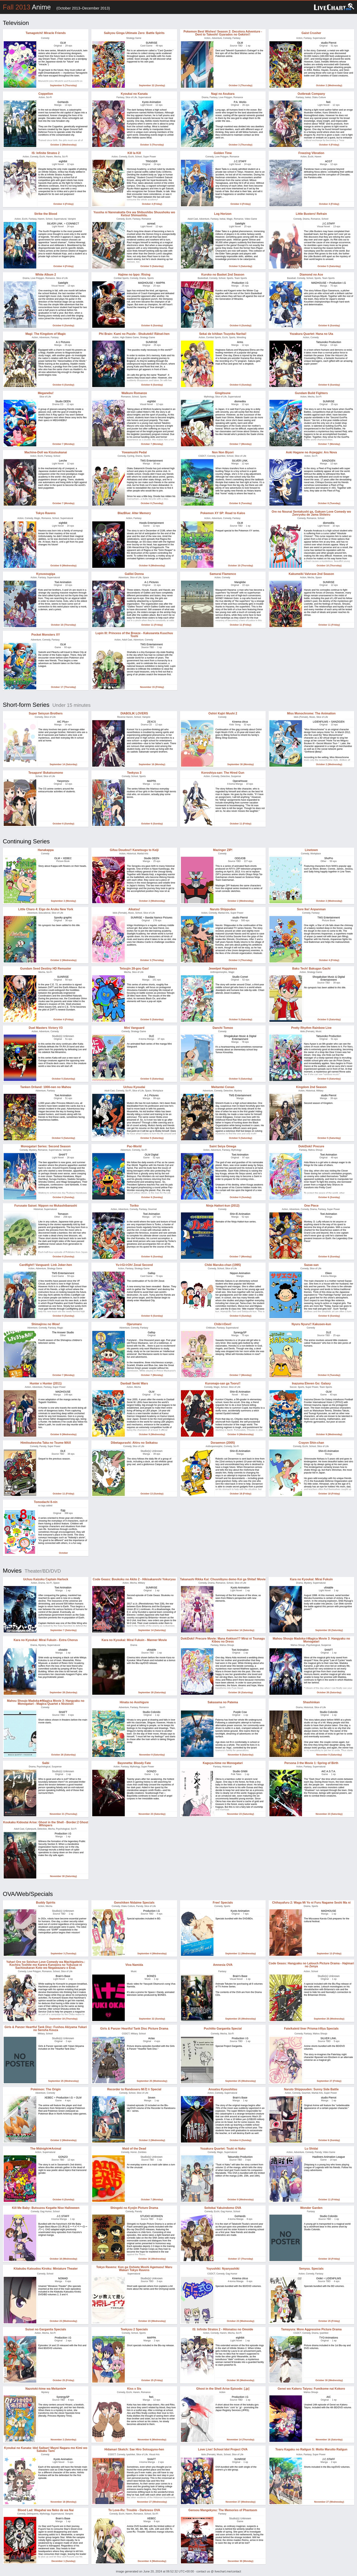 2013 Anime, Seasonal Chart